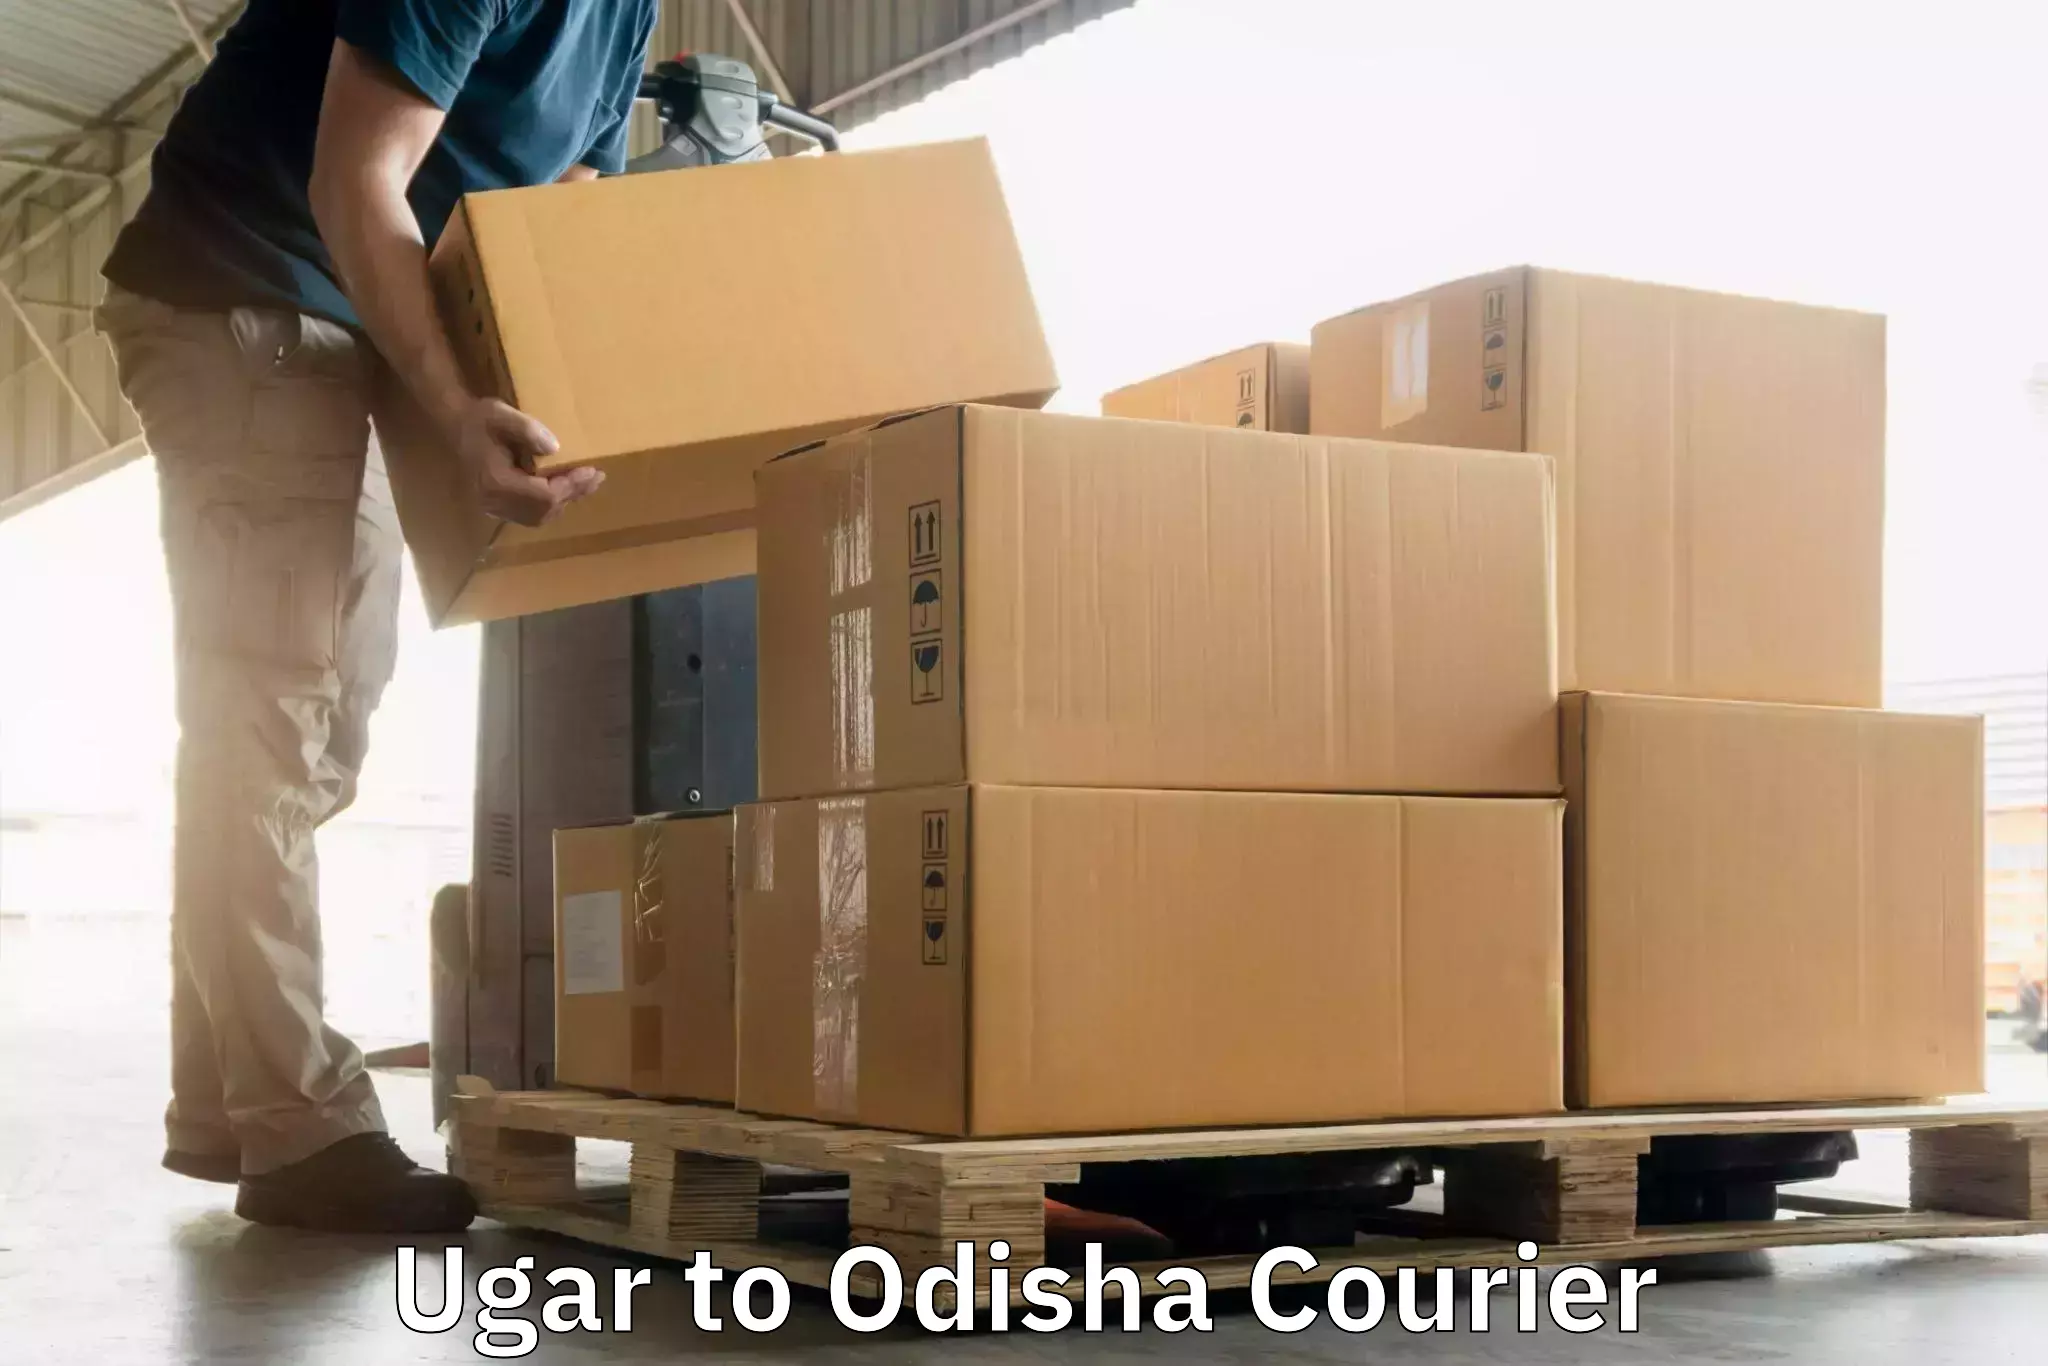 Efficient cargo handling Ugar to Gumadera